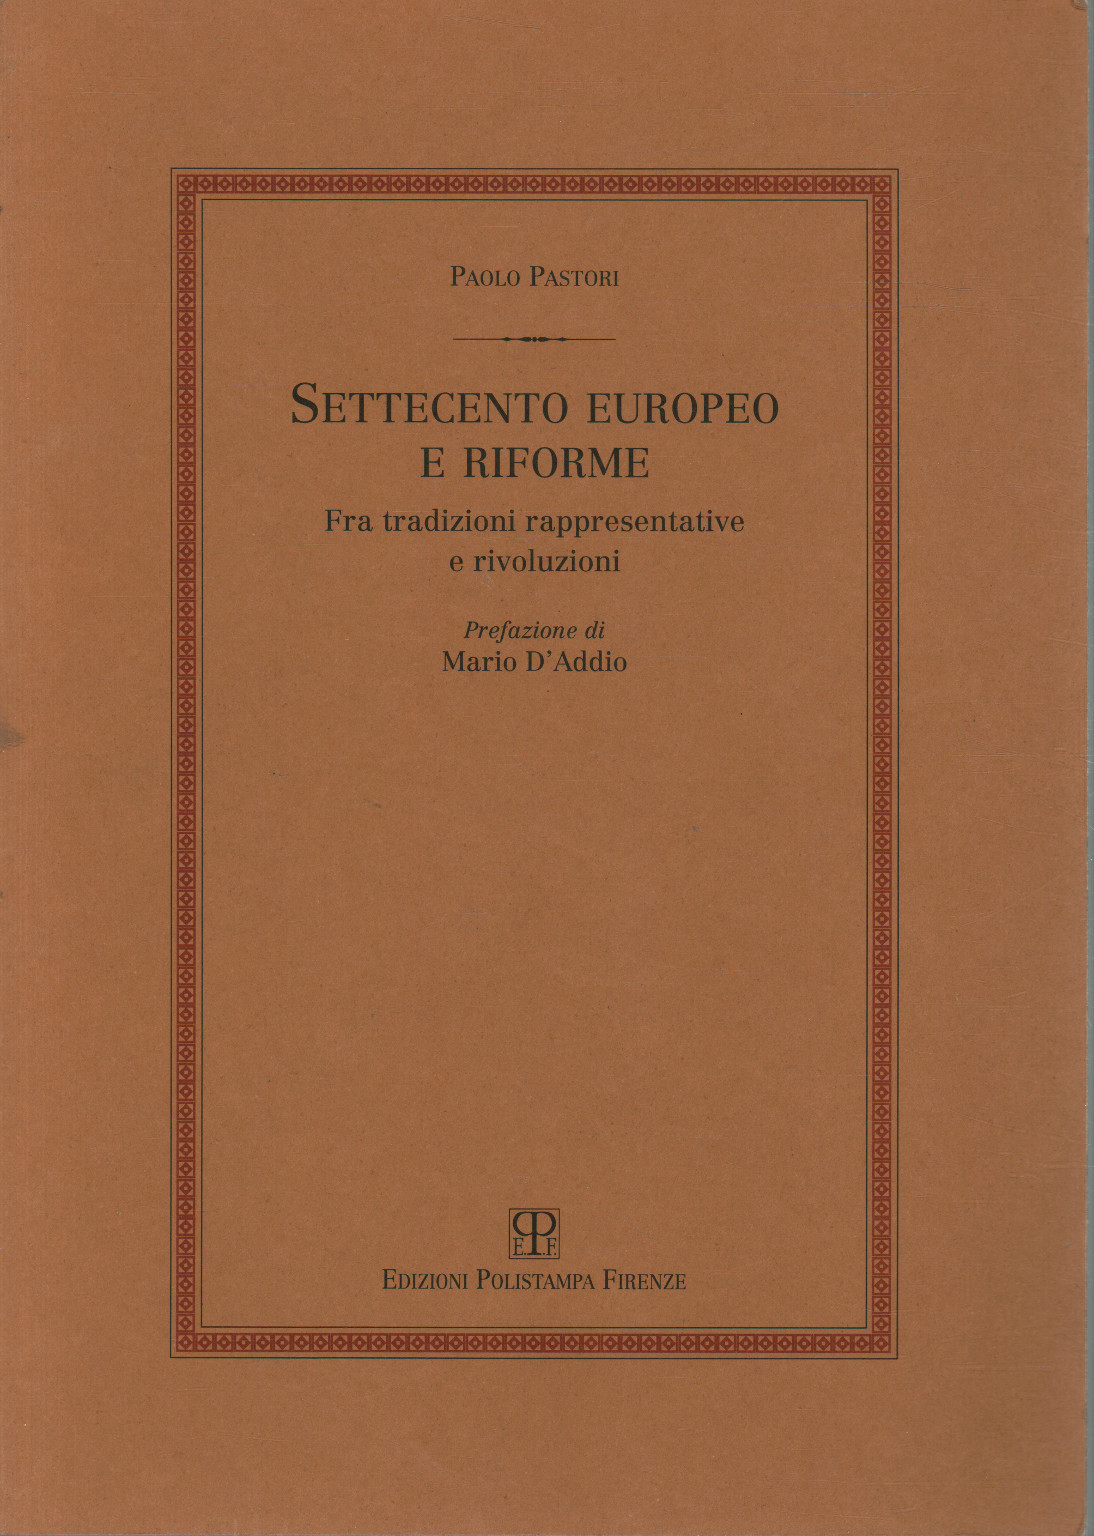 European eighteenth century and reforms, Paolo Pastori